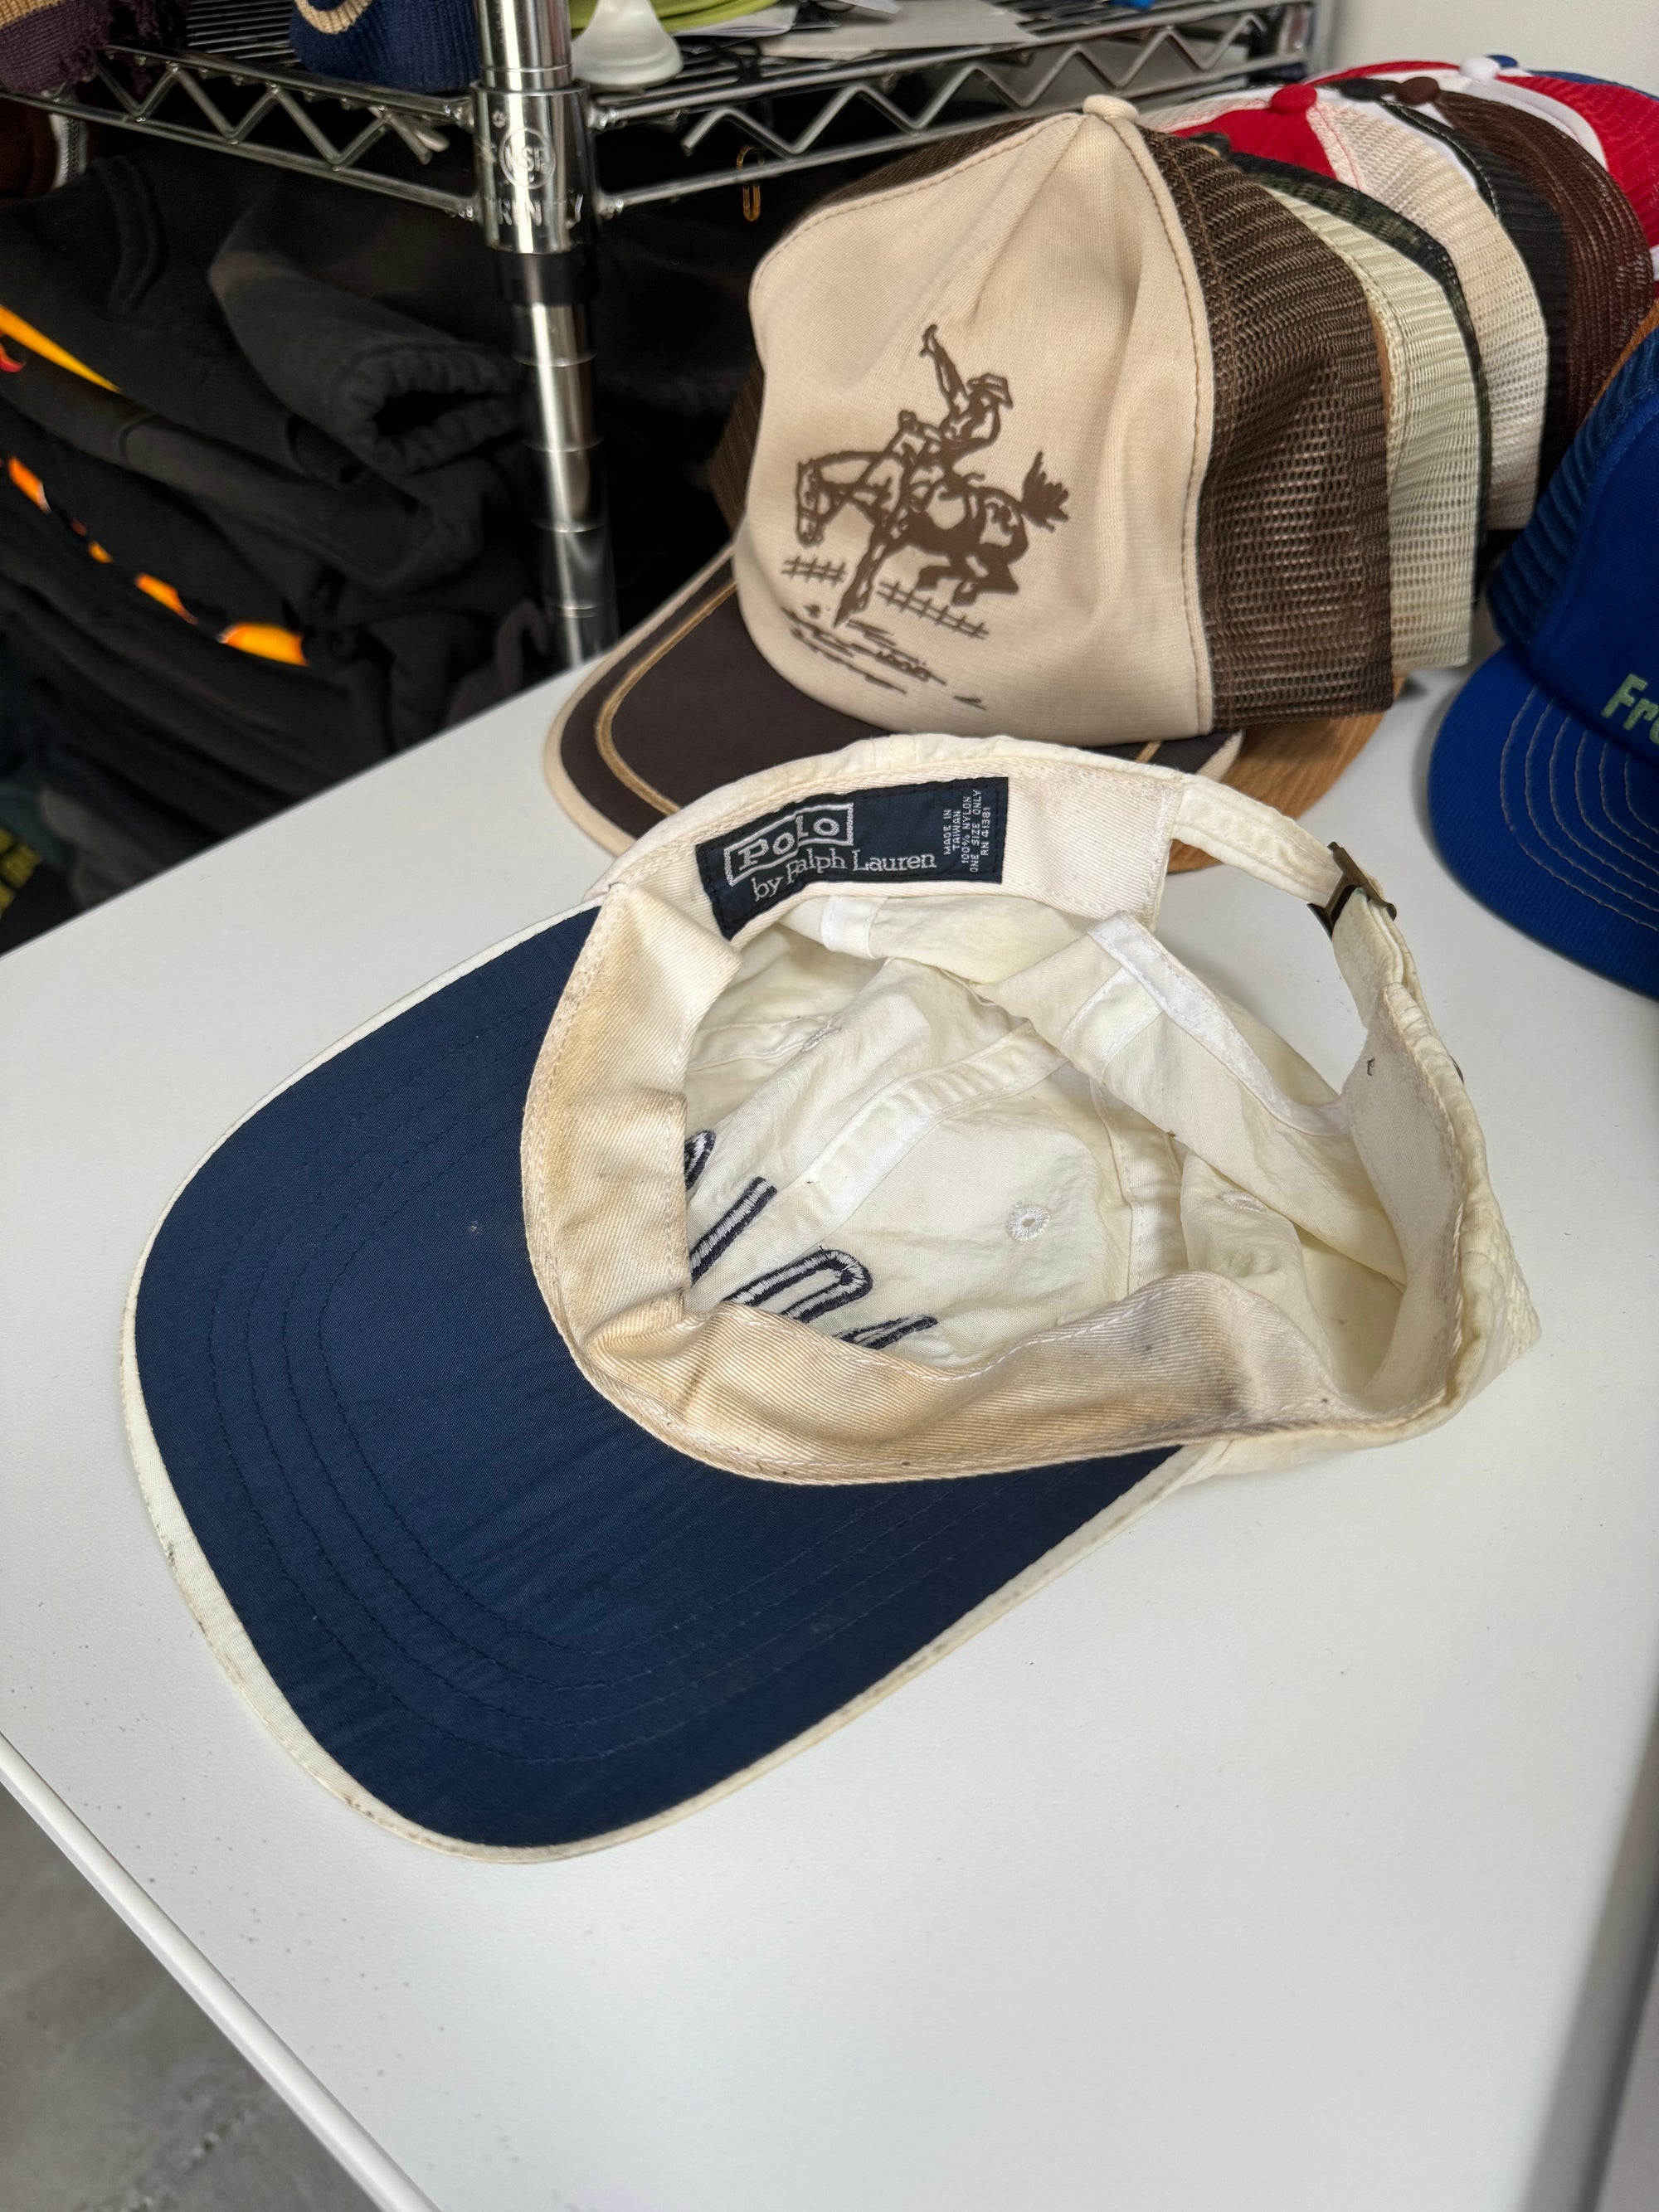 1990s "Polo" Nylon Hat